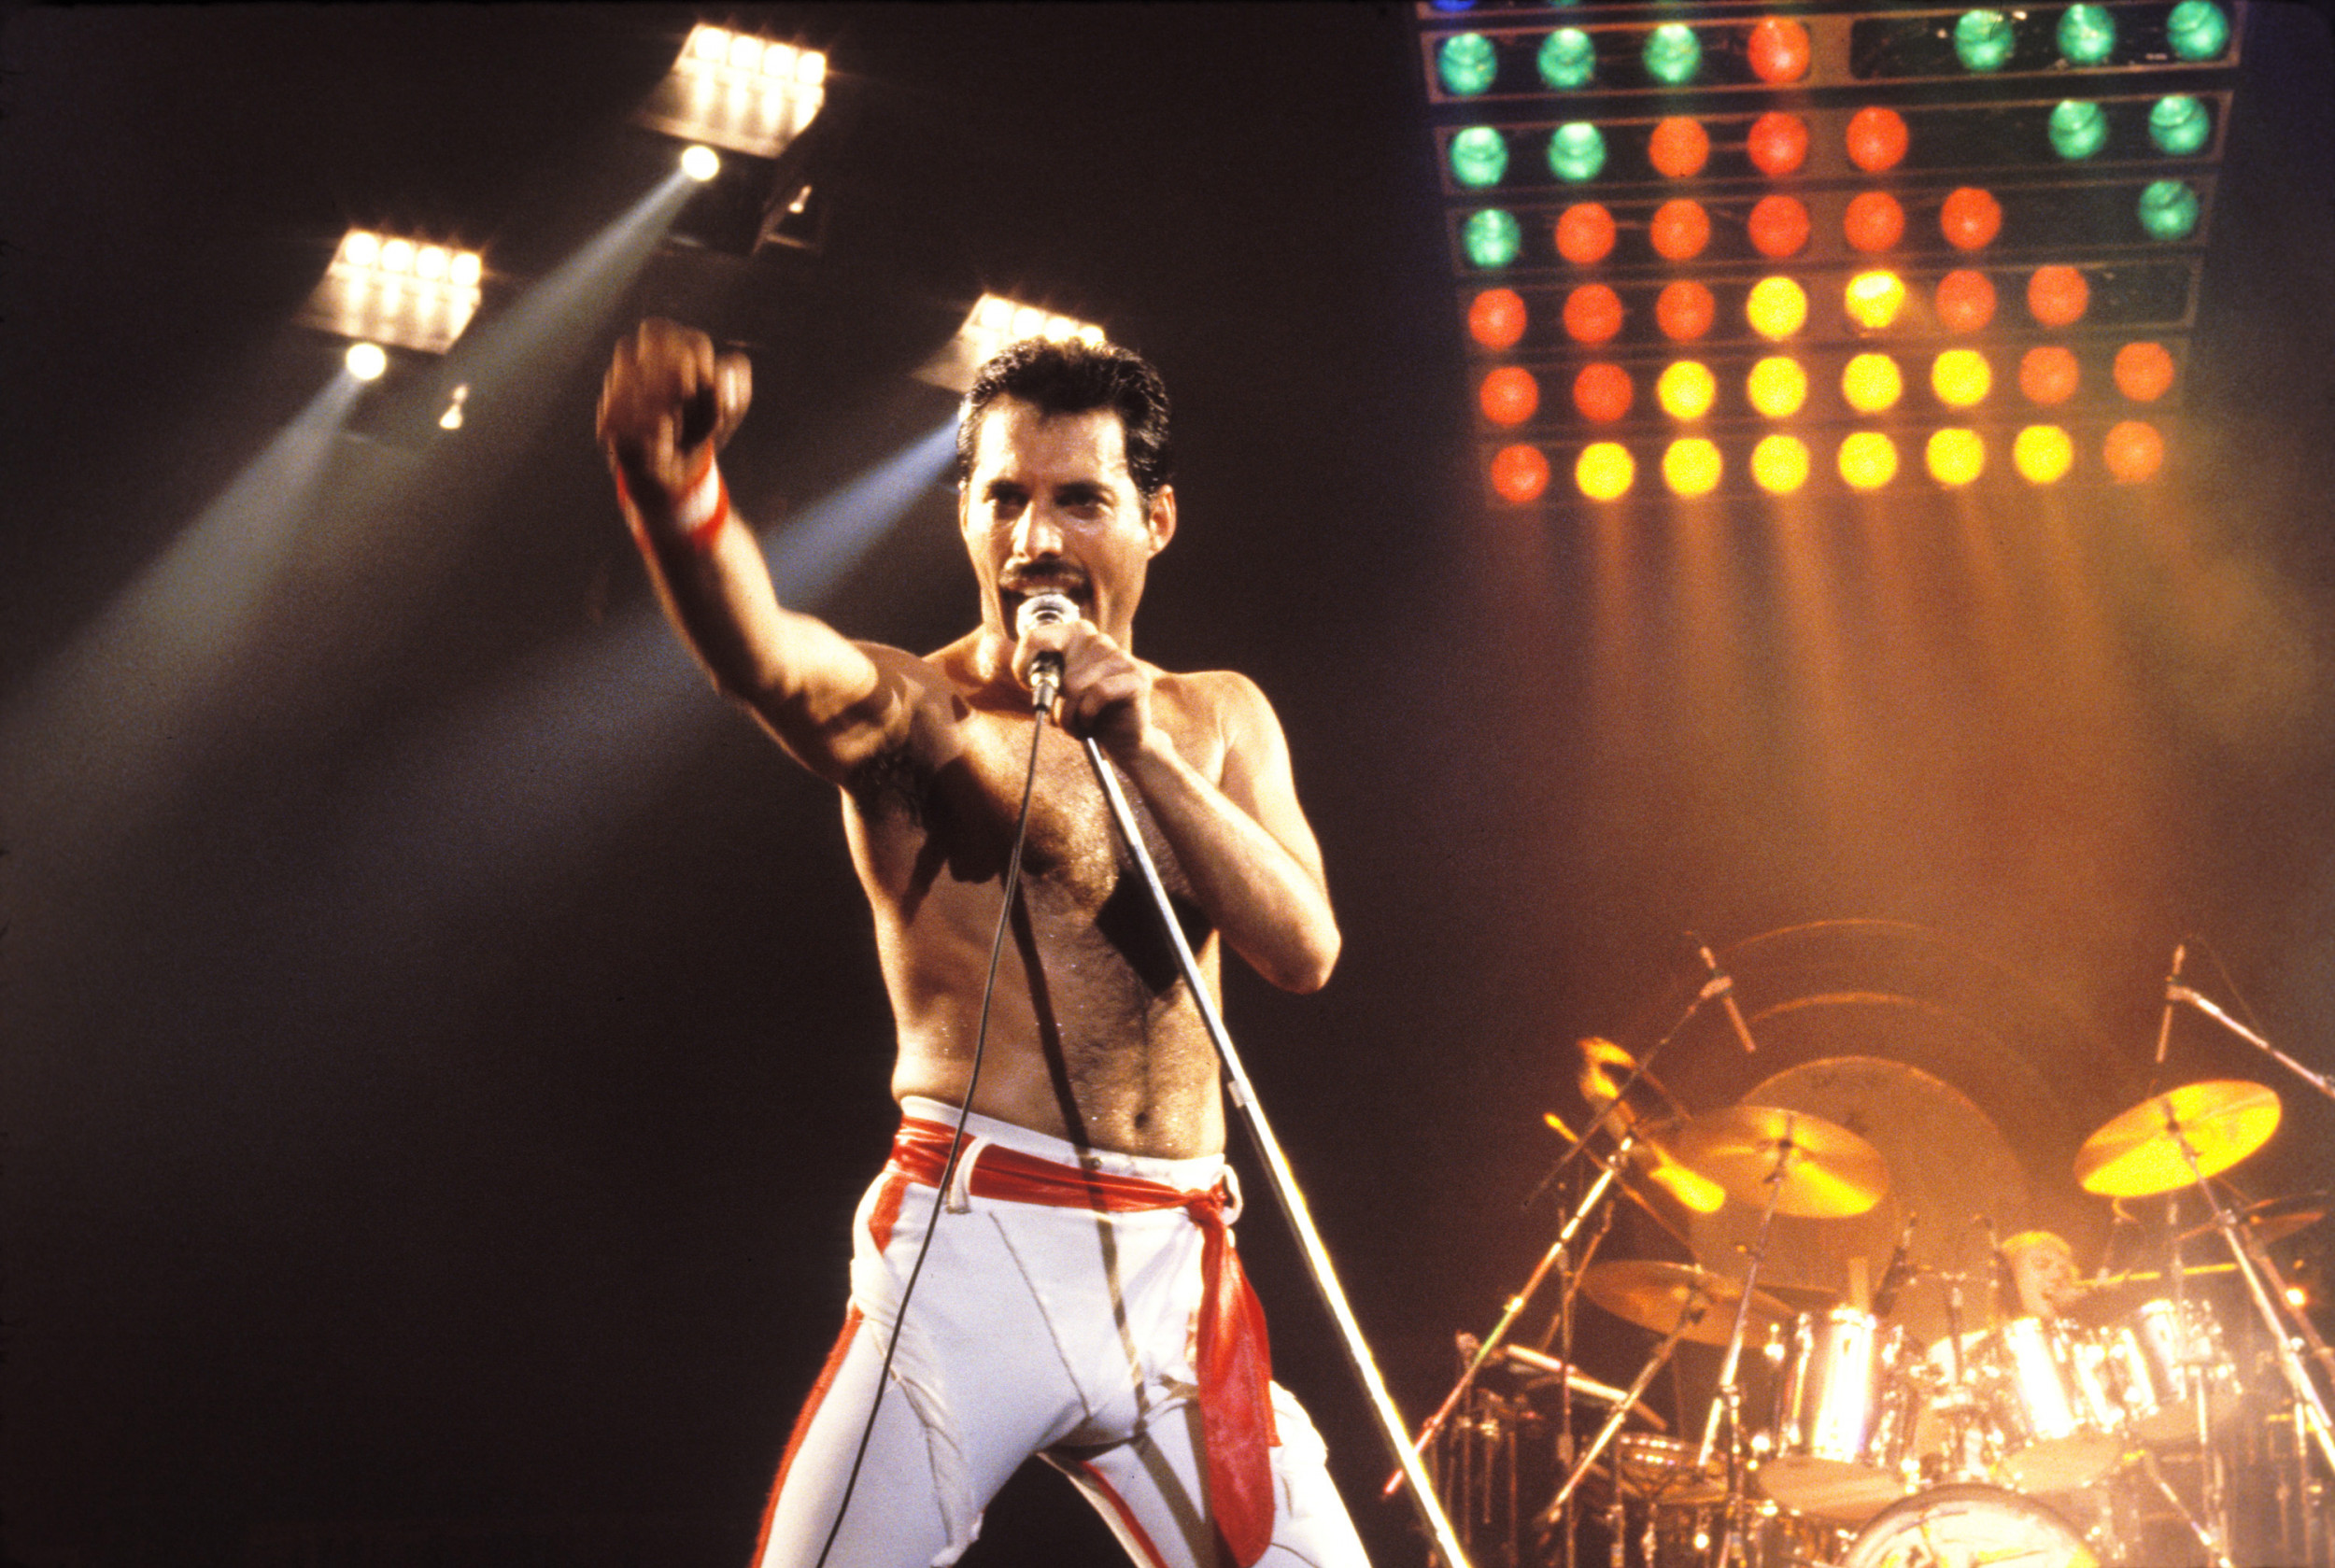 Queen S Bohemian Rhapsody But Make It The Coronavirus Says Twitter